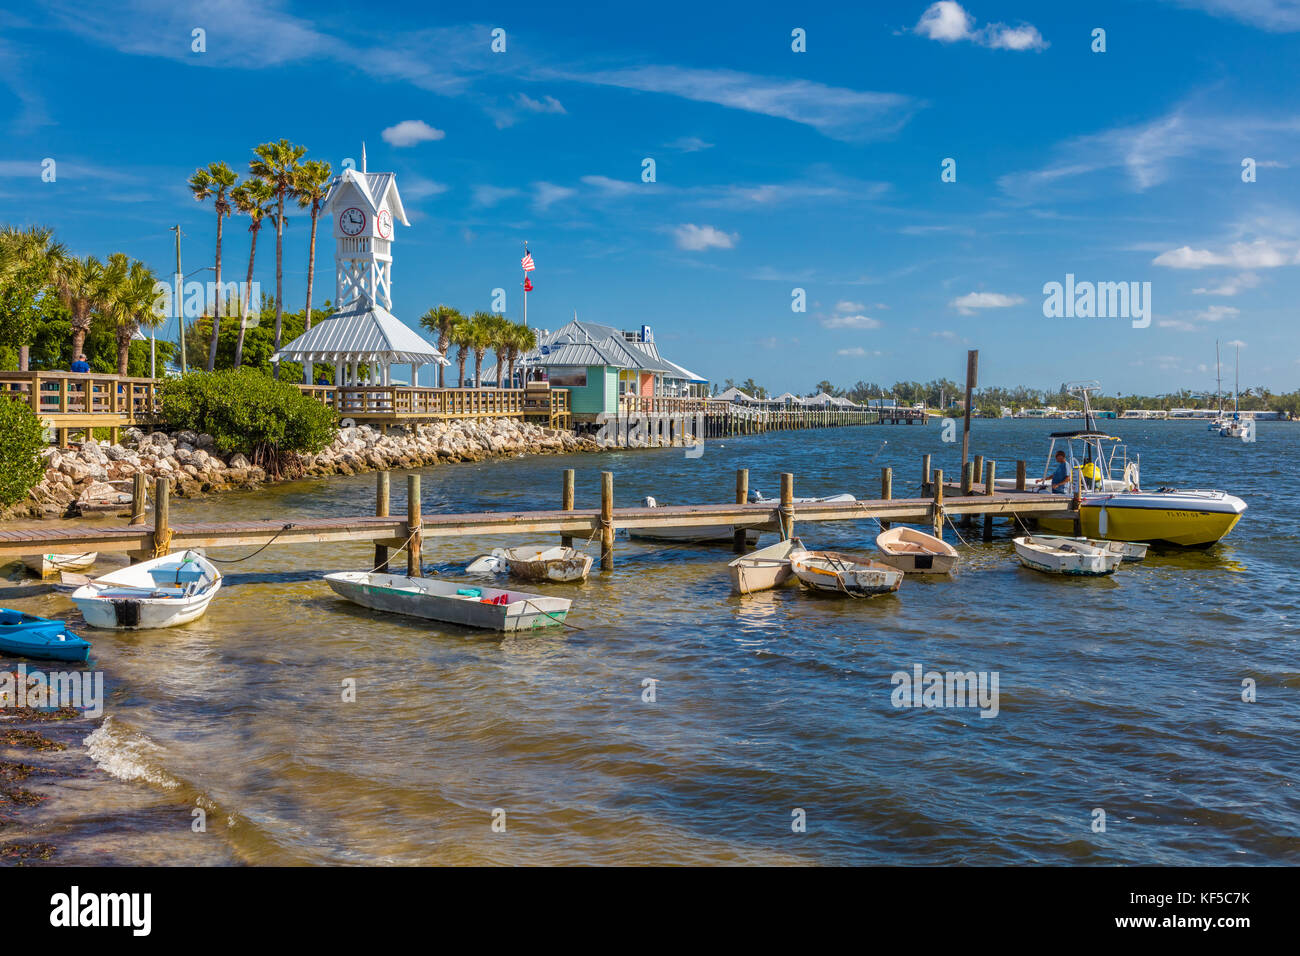 Bridge Street Pier and clock tower on Anna Maria Island in Bradenton Beach Florida Stock Photo